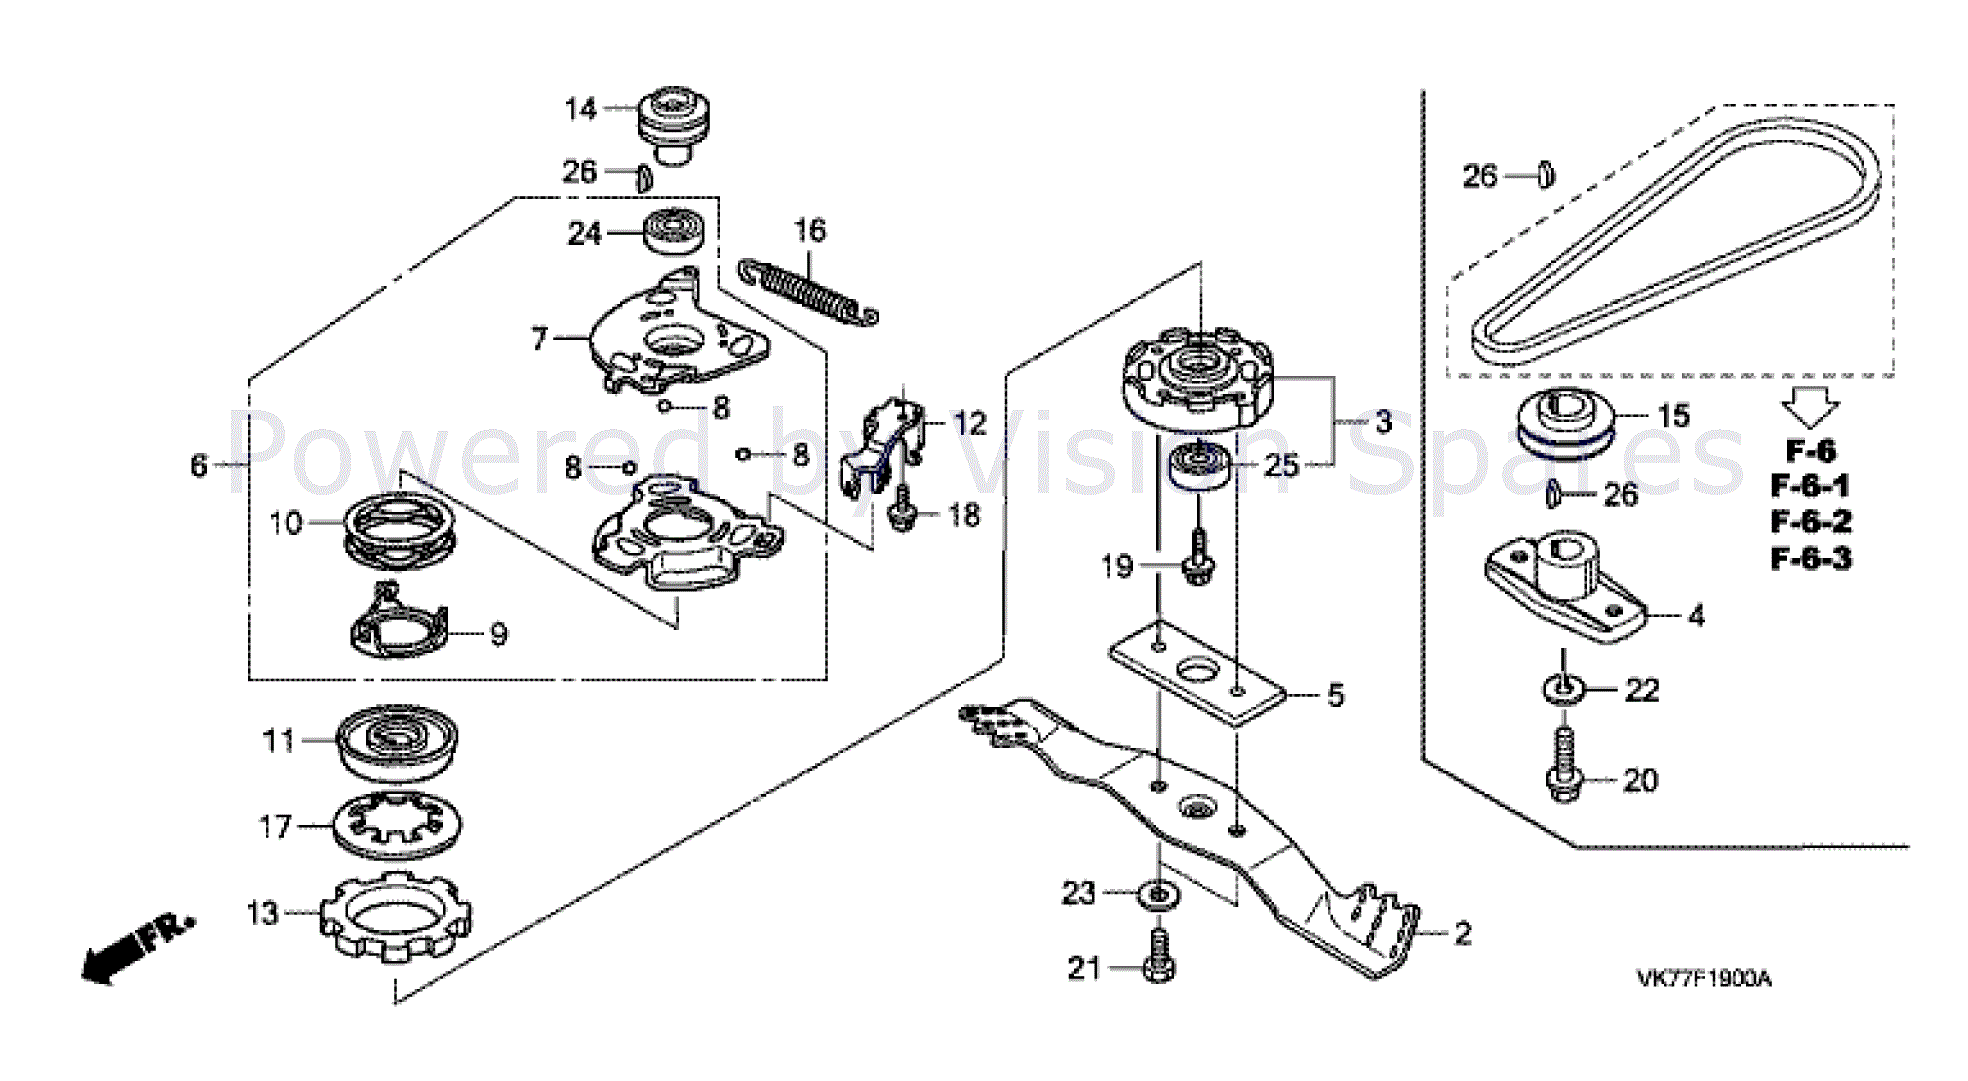 Honda Lawn Mower Hrx217 Parts Diagram